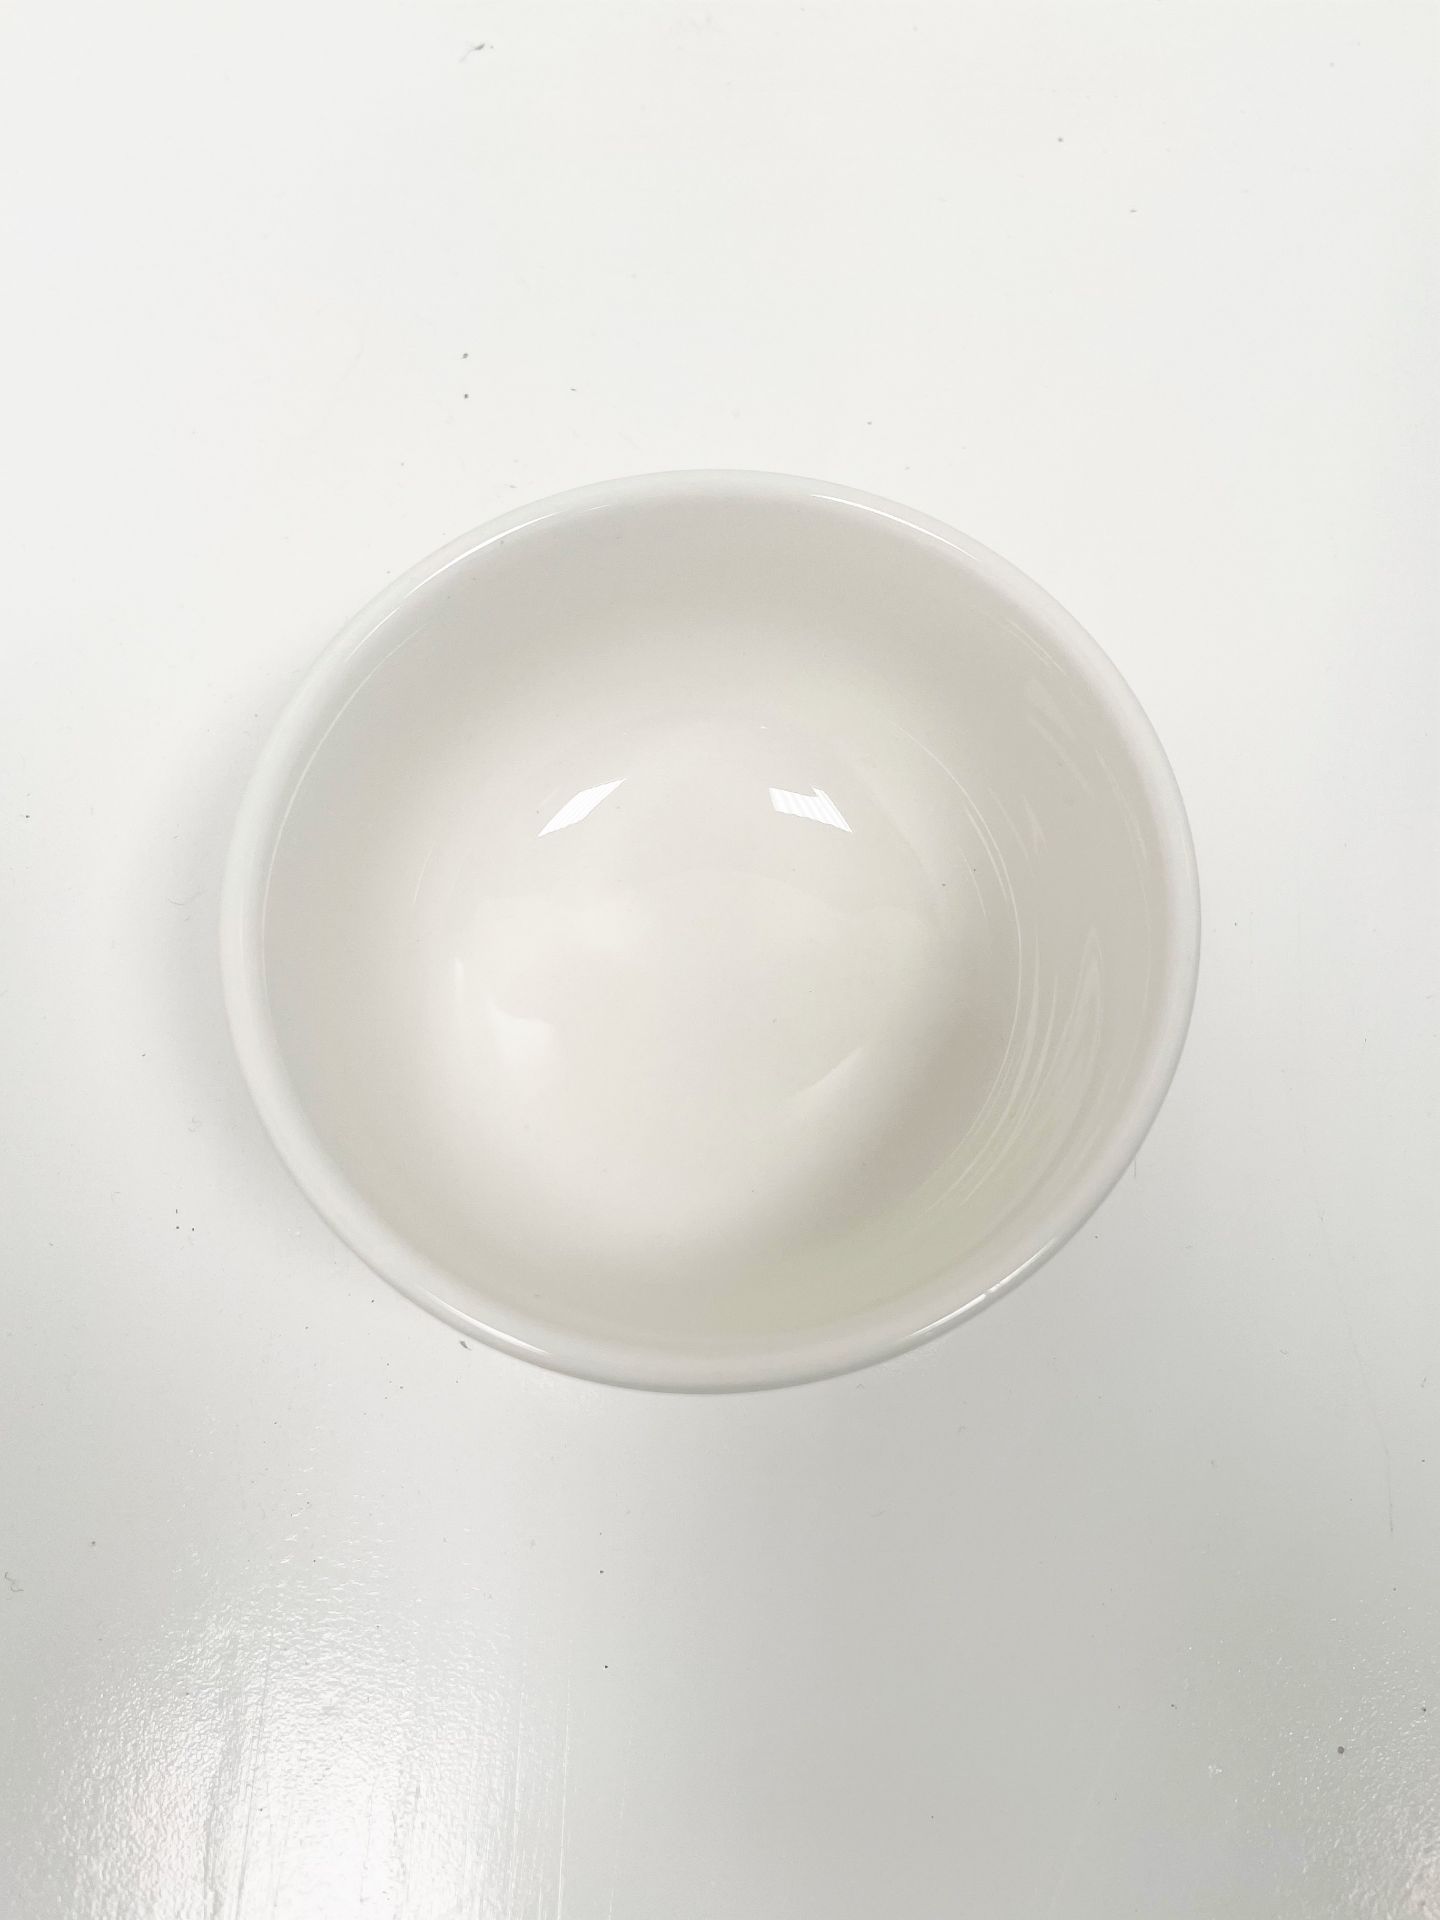 White Food Bowl 4.5" x60 - Image 2 of 2